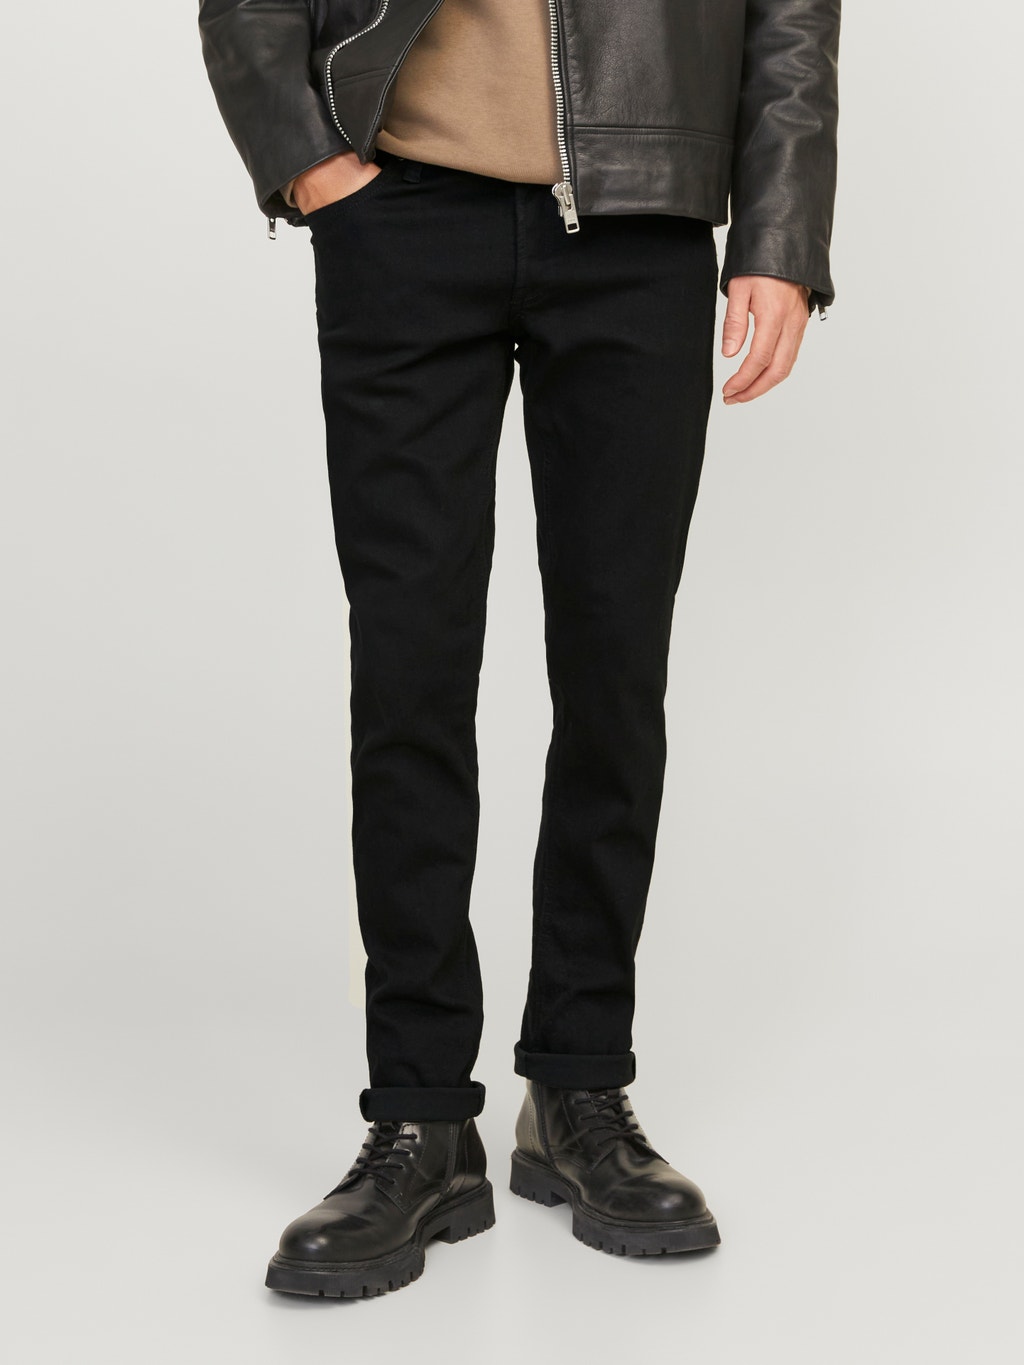 AM 816 Slim fit jeans | Black | Jack & Jones®